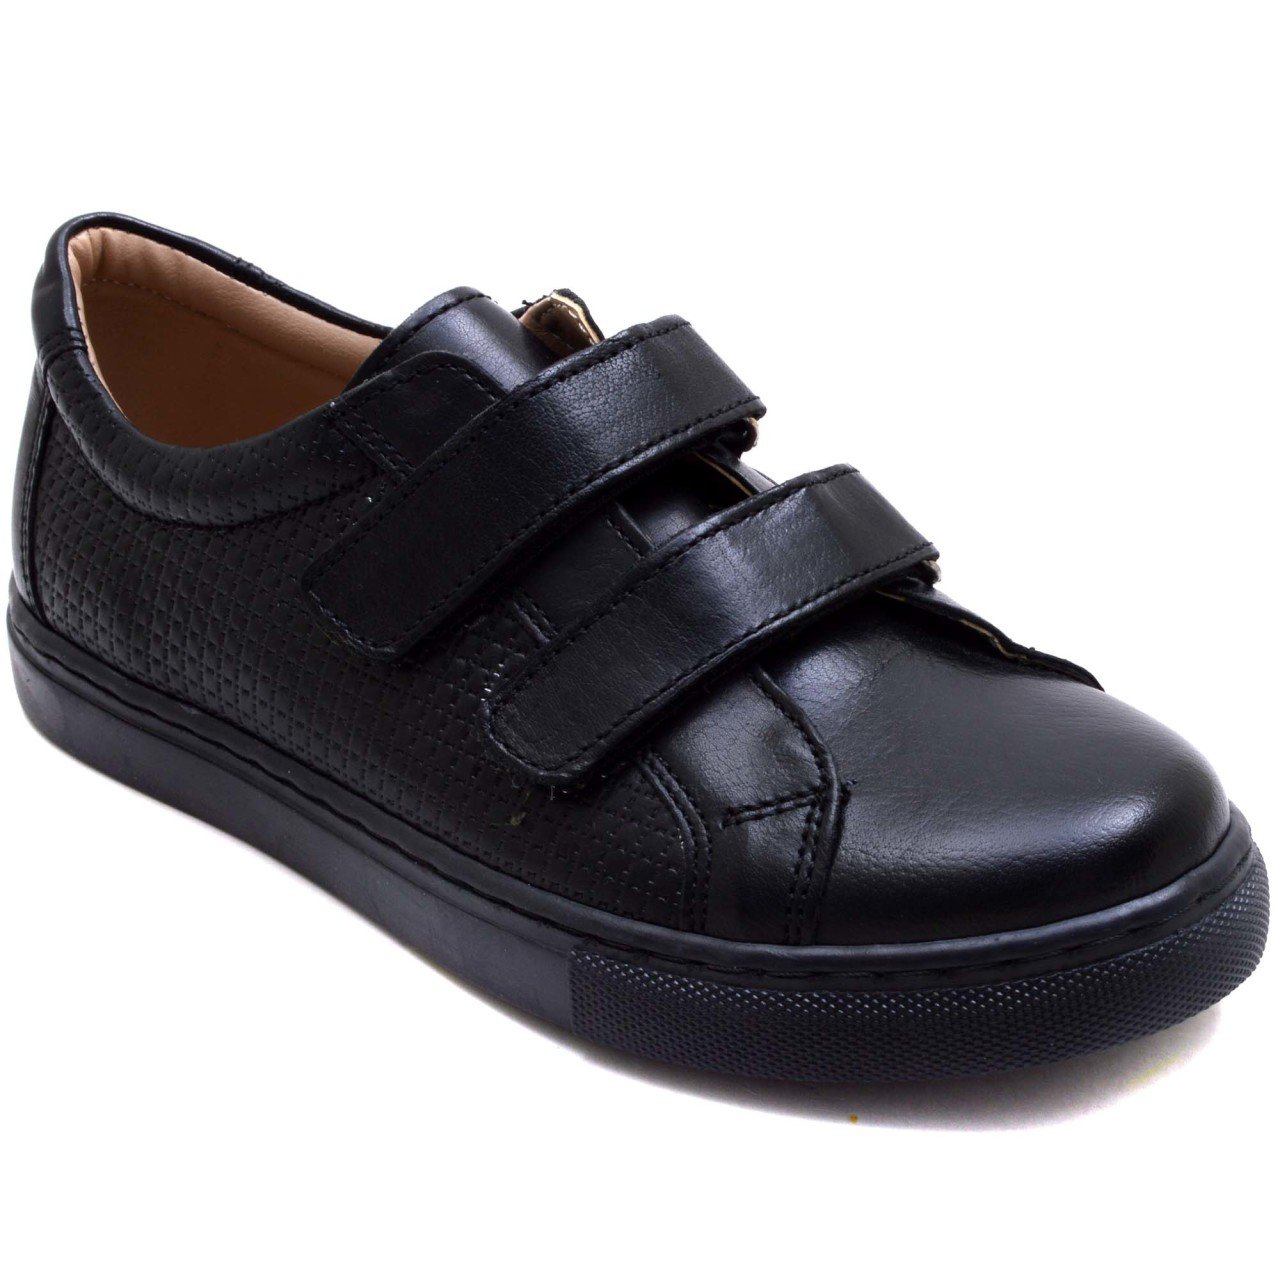 Y&Y 320 Çift Cırt Filet Ayakkabı - Siyah (Deri)